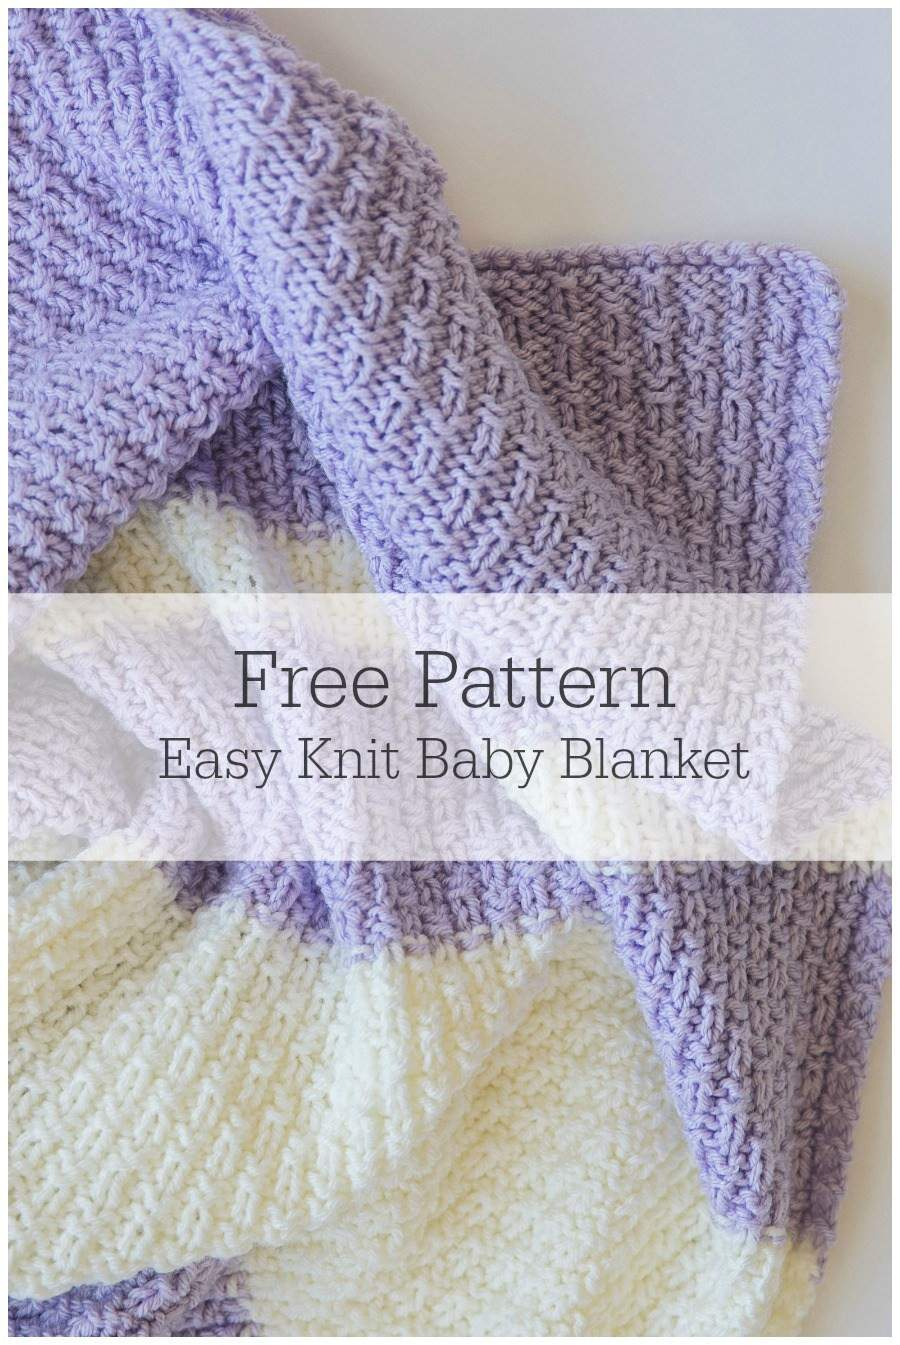 Free Easy Knitting Patterns Unique Easy Knit Ba Blanket Pattern Leelee Knitsleelee Knits Free